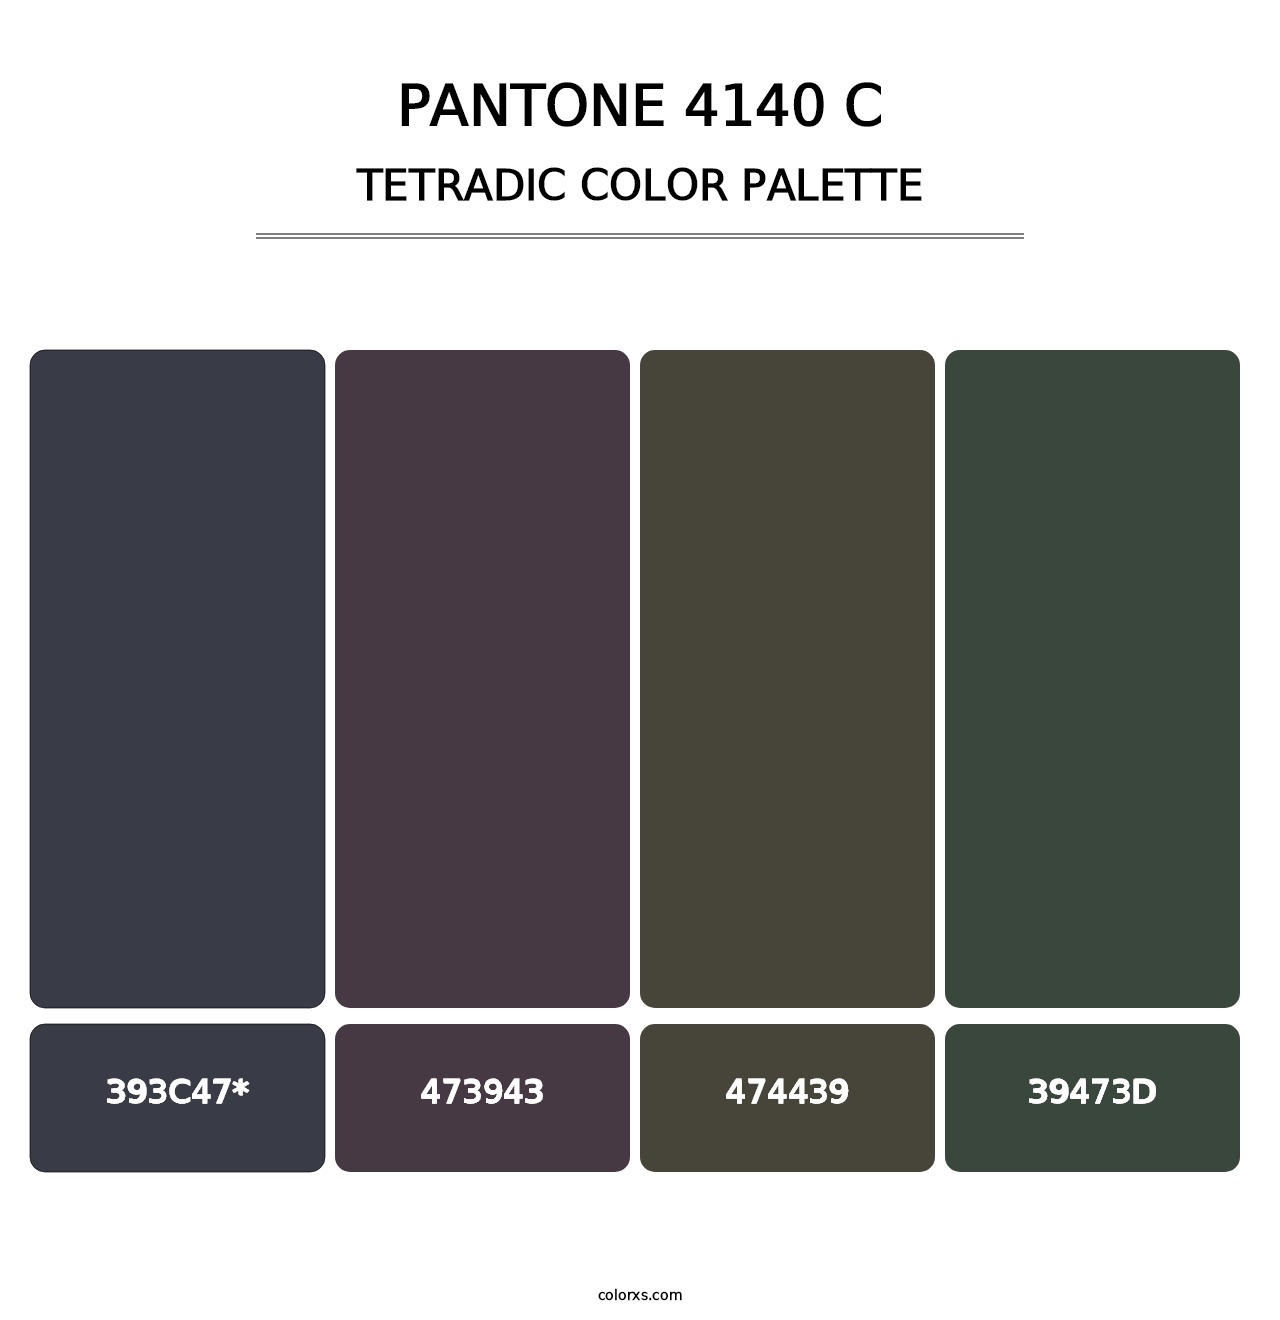 PANTONE 4140 C - Tetradic Color Palette